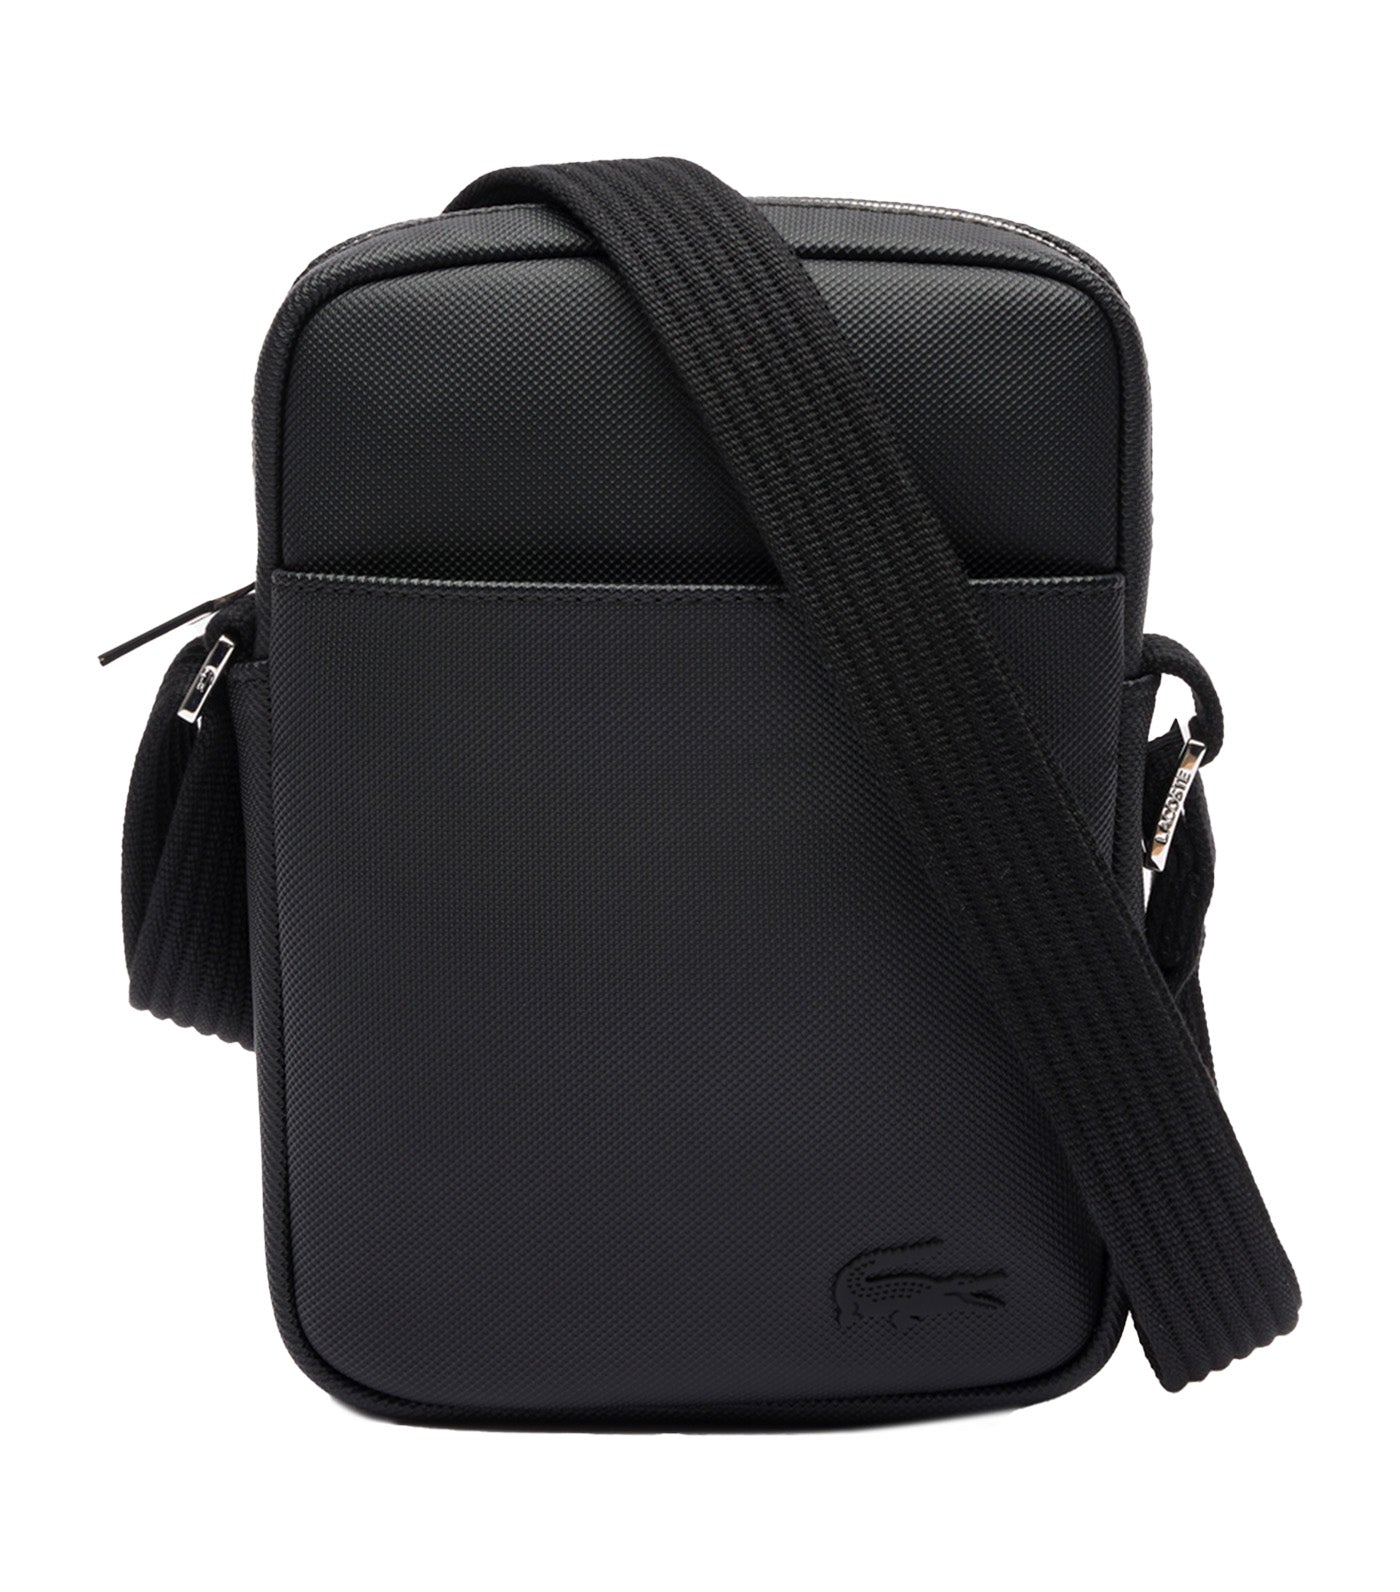 Lacoste Men's PVC Medium Crossover Bag, Noir